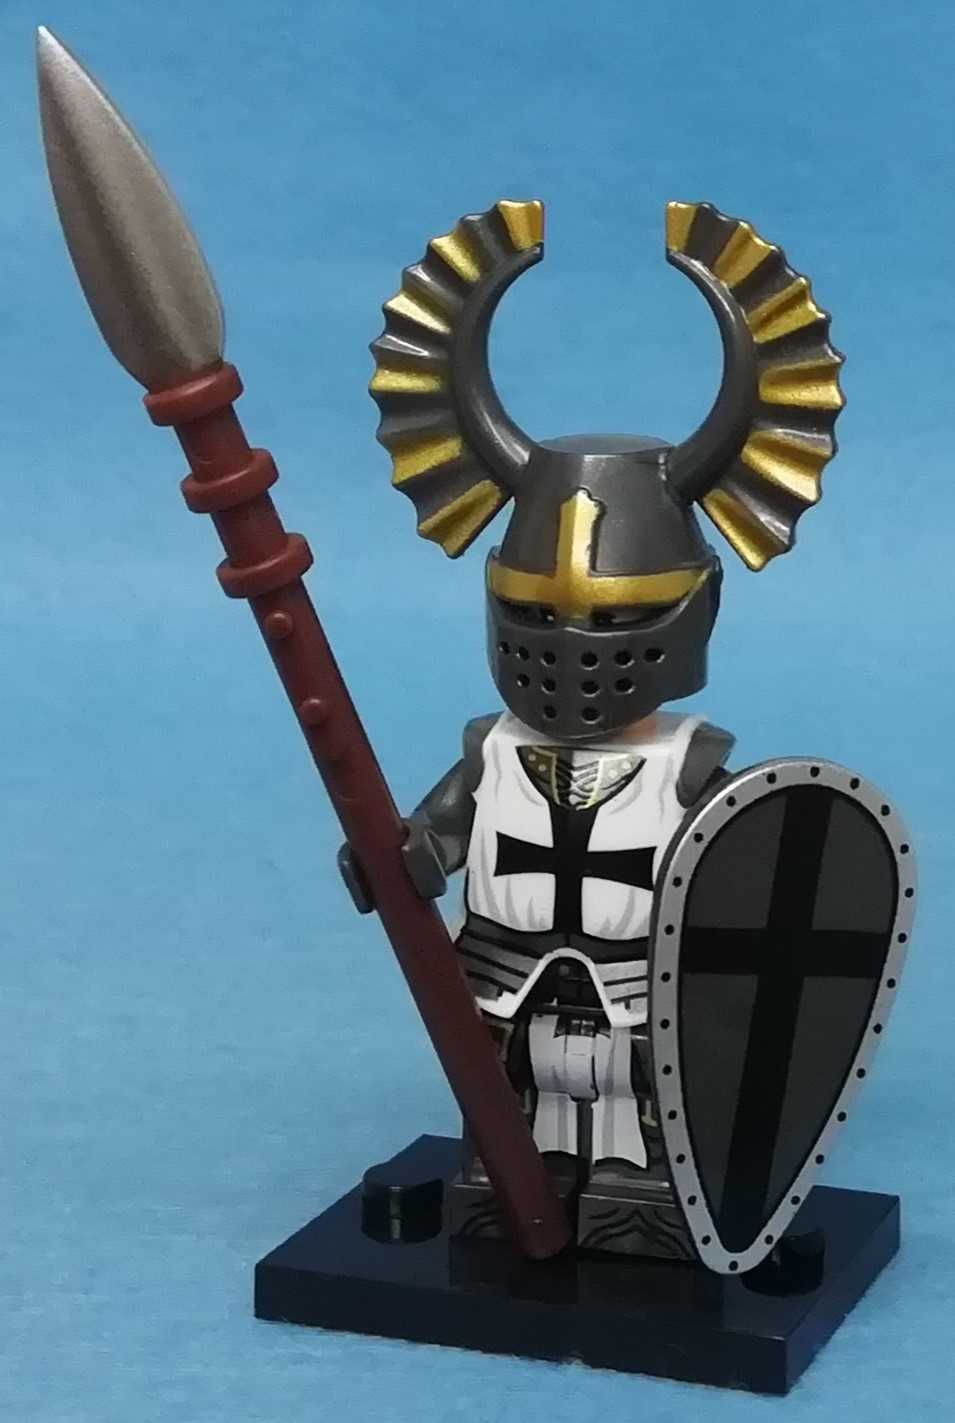 Teutonic Knight (Tempos Antigos)